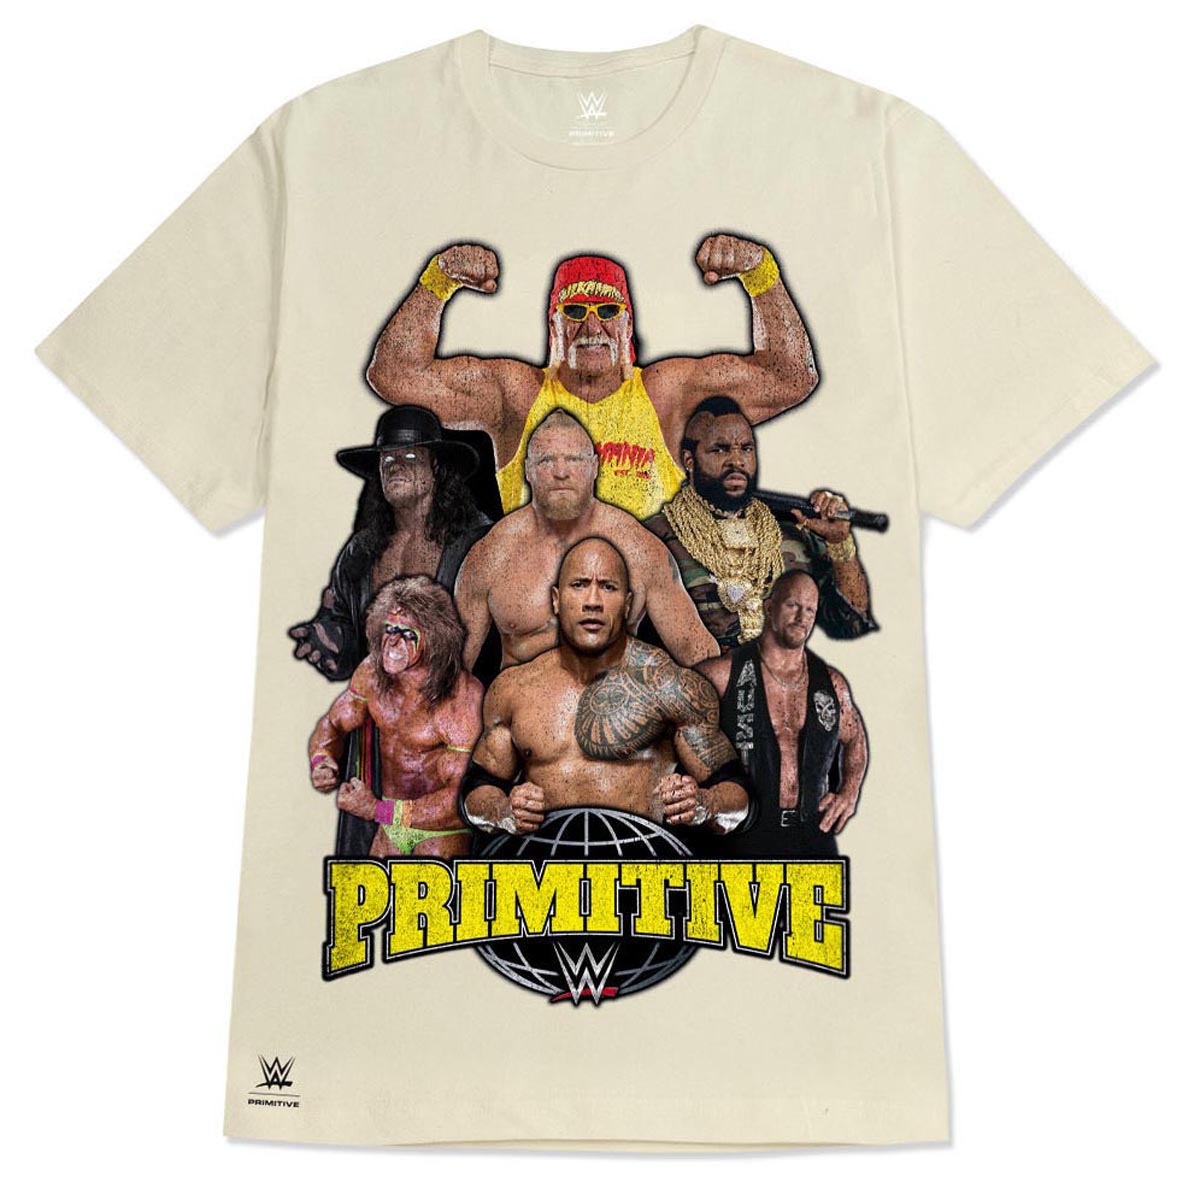 Primitive x WWE Mania T-Shirt - Cream image 1